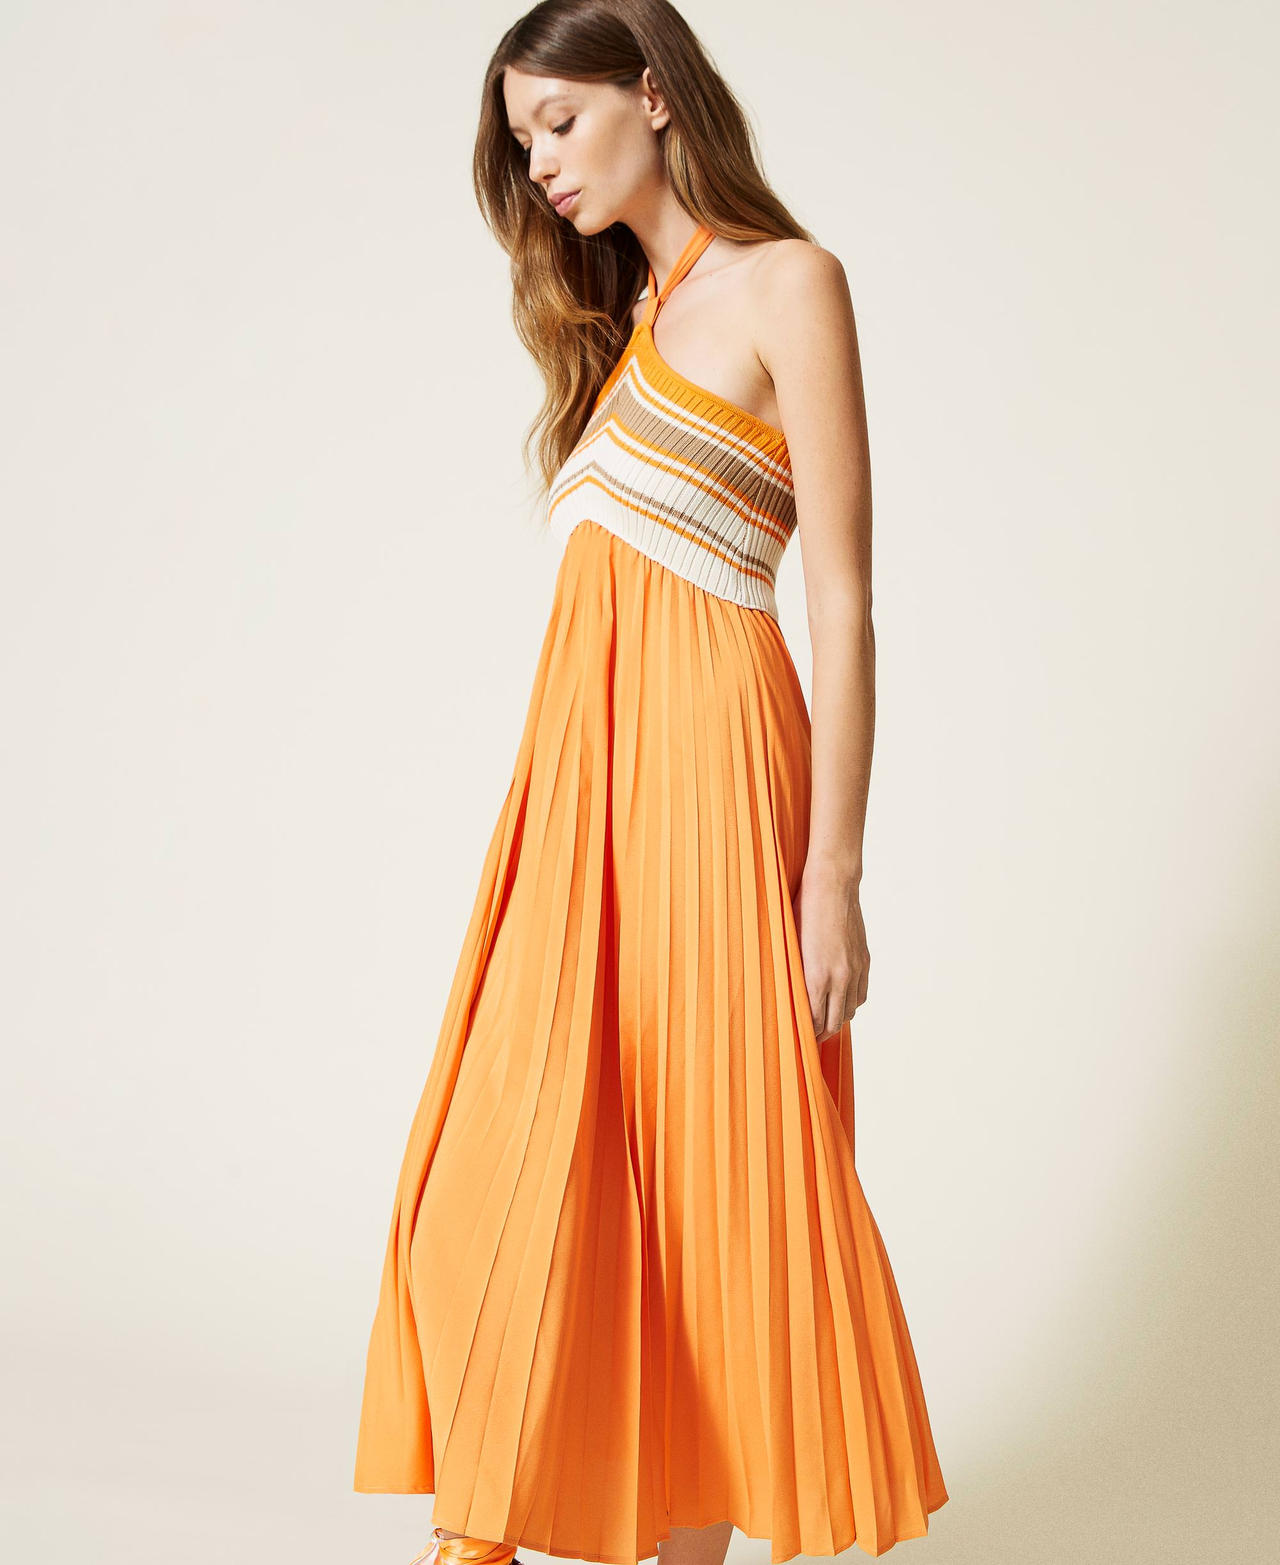 Long dress with stripes and pleats Mellon / Dune / Ivory Multicolour Woman 221LB31NN-02